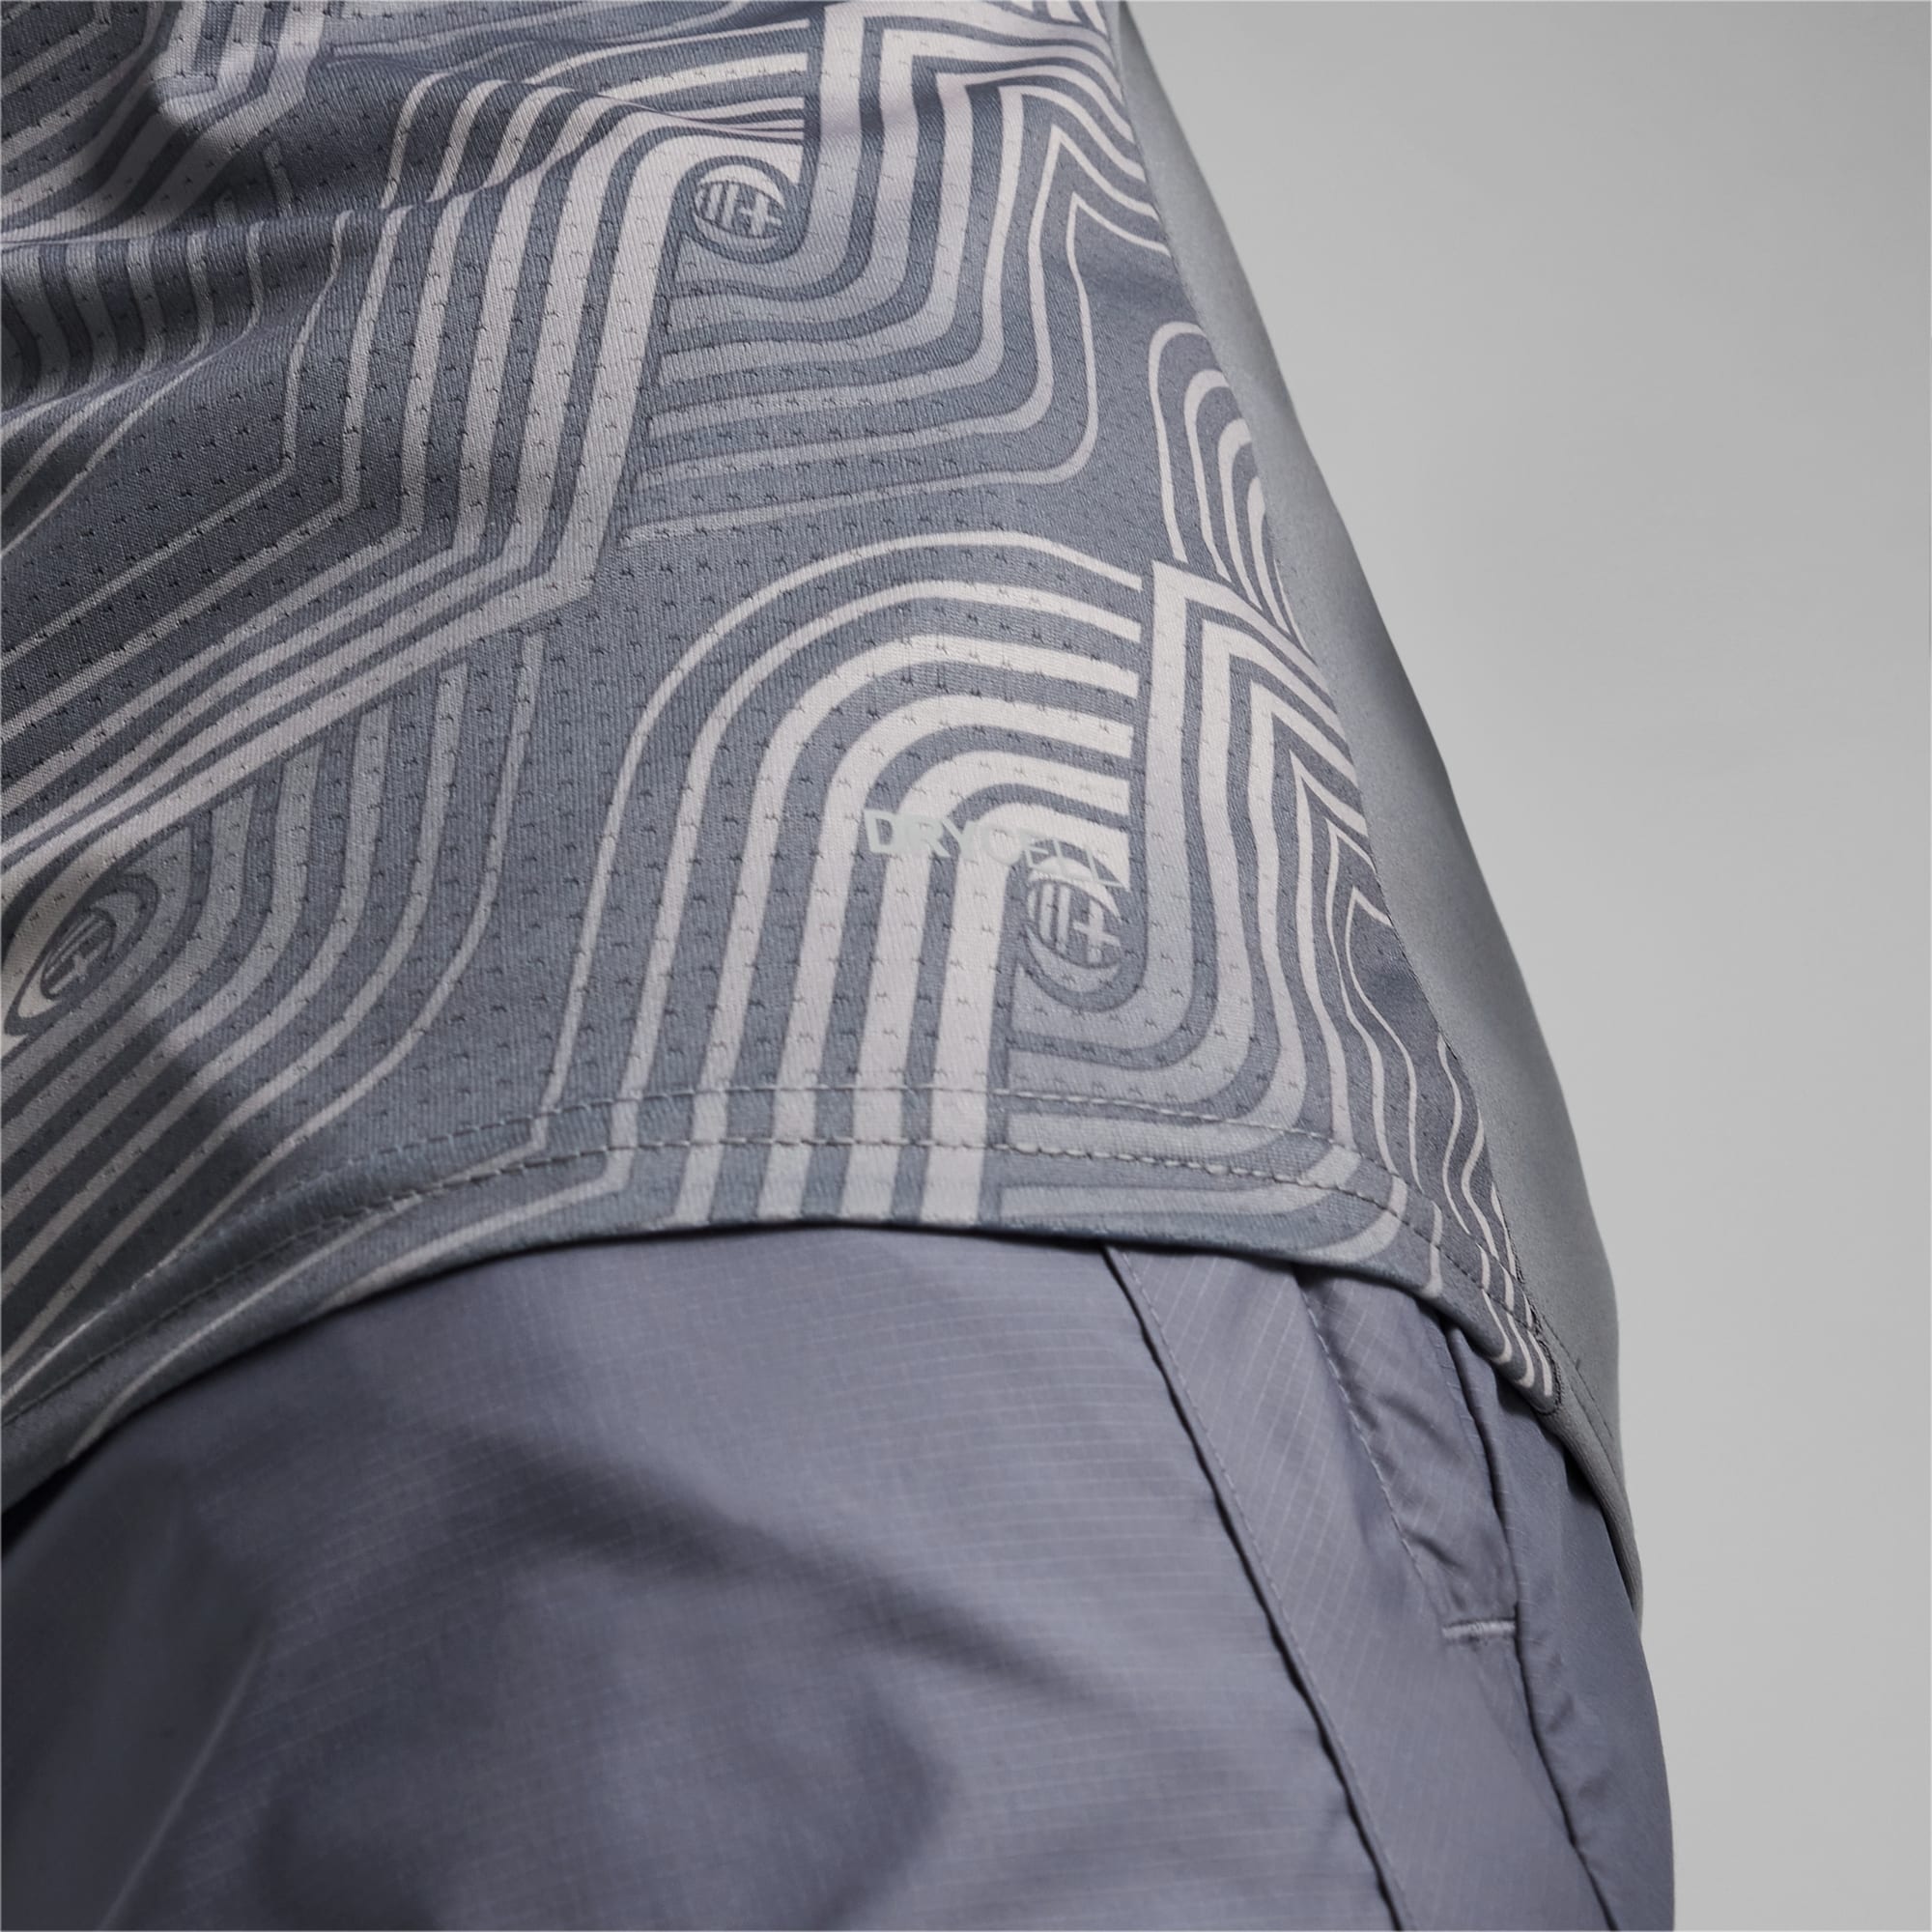 Men's PUMA AC Milan Pre-Match Football Jersey, Grey Tile/Ravish, Size XS, Clothing